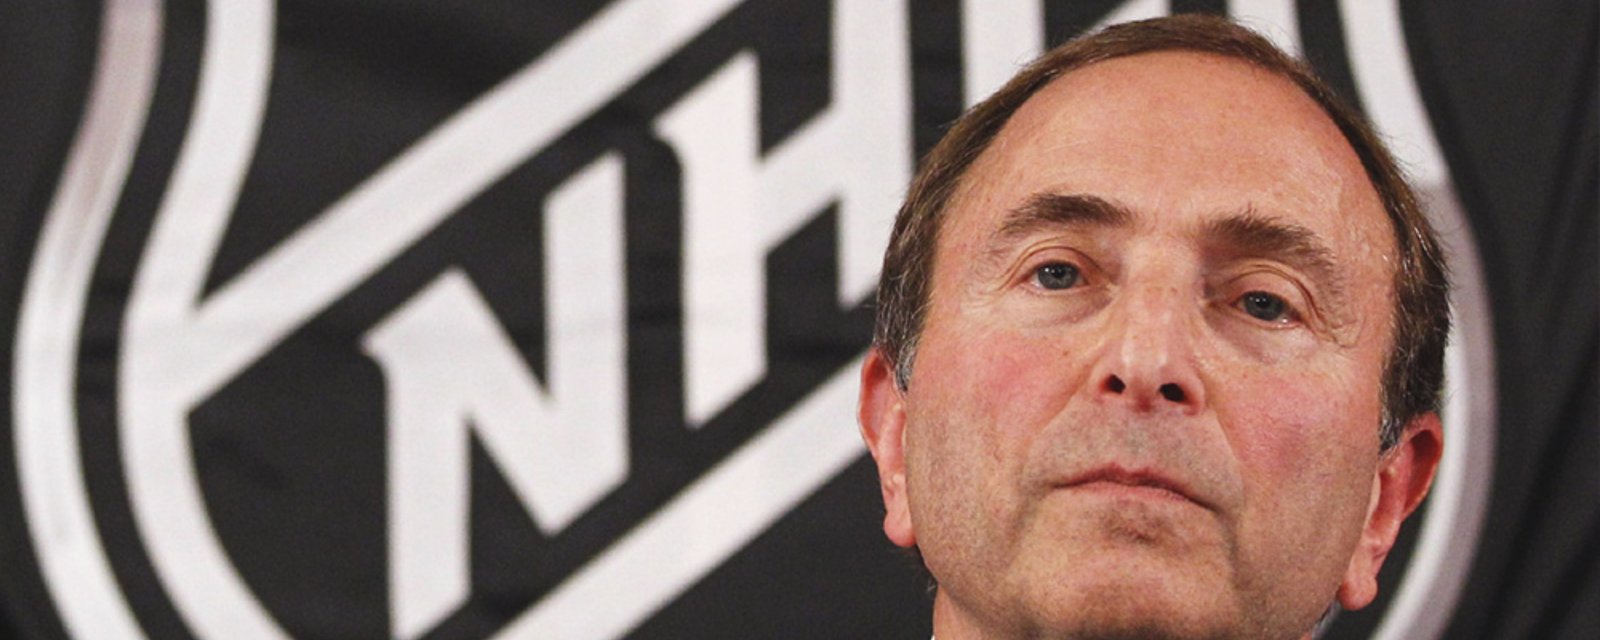 Bettman addresses NHL expansion developments